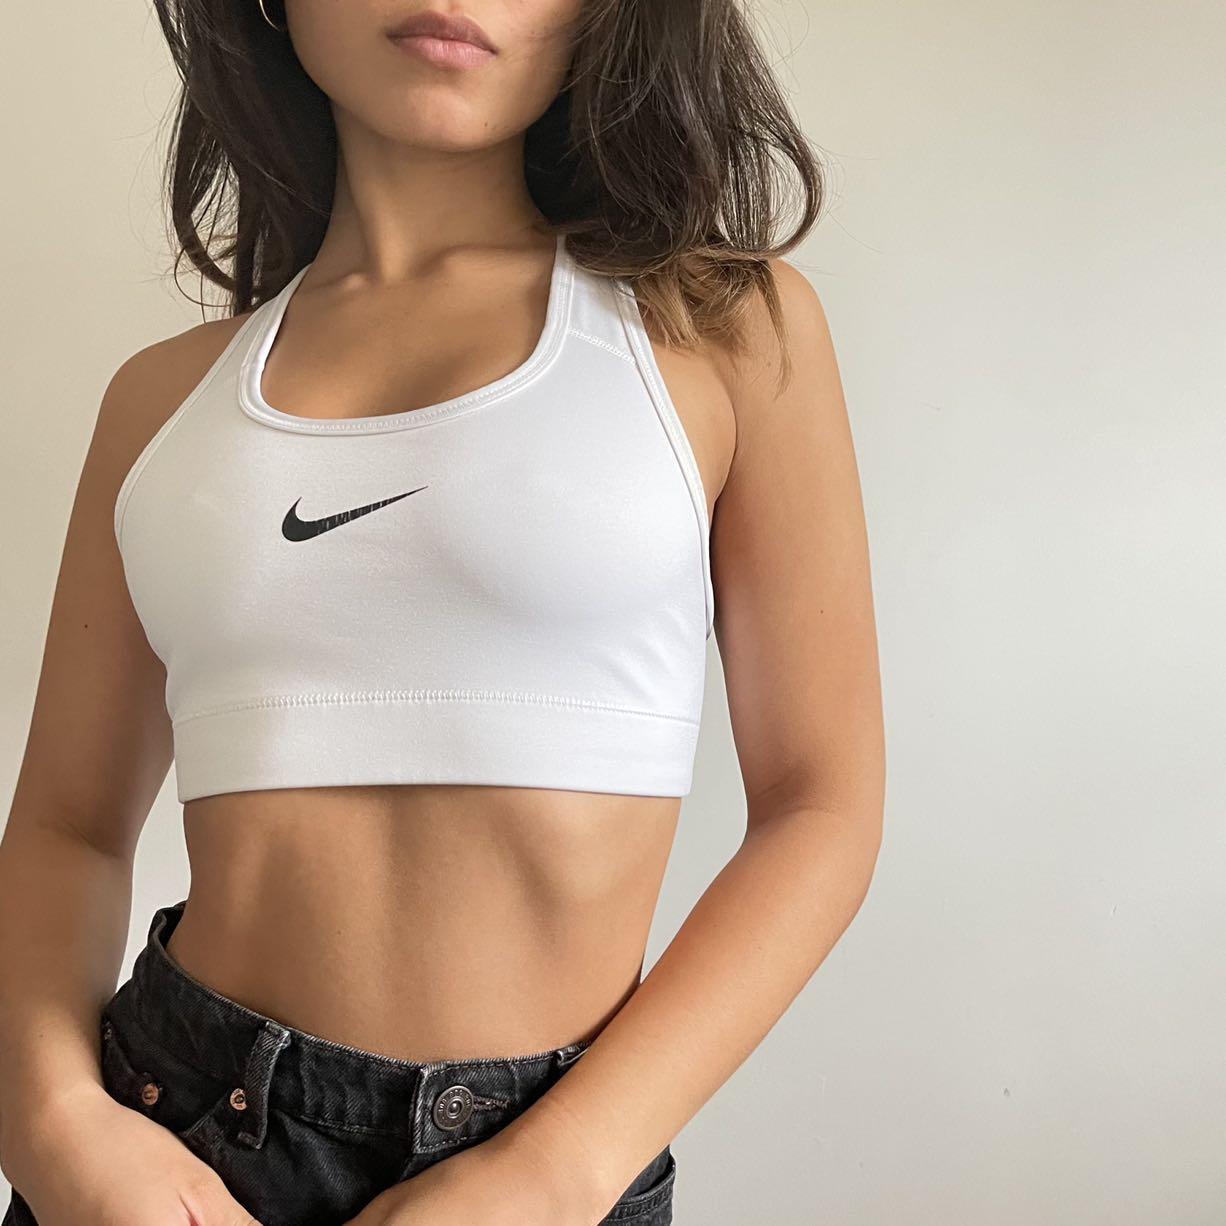 Nike white sports bra, Women's Fashion, New Undergarments